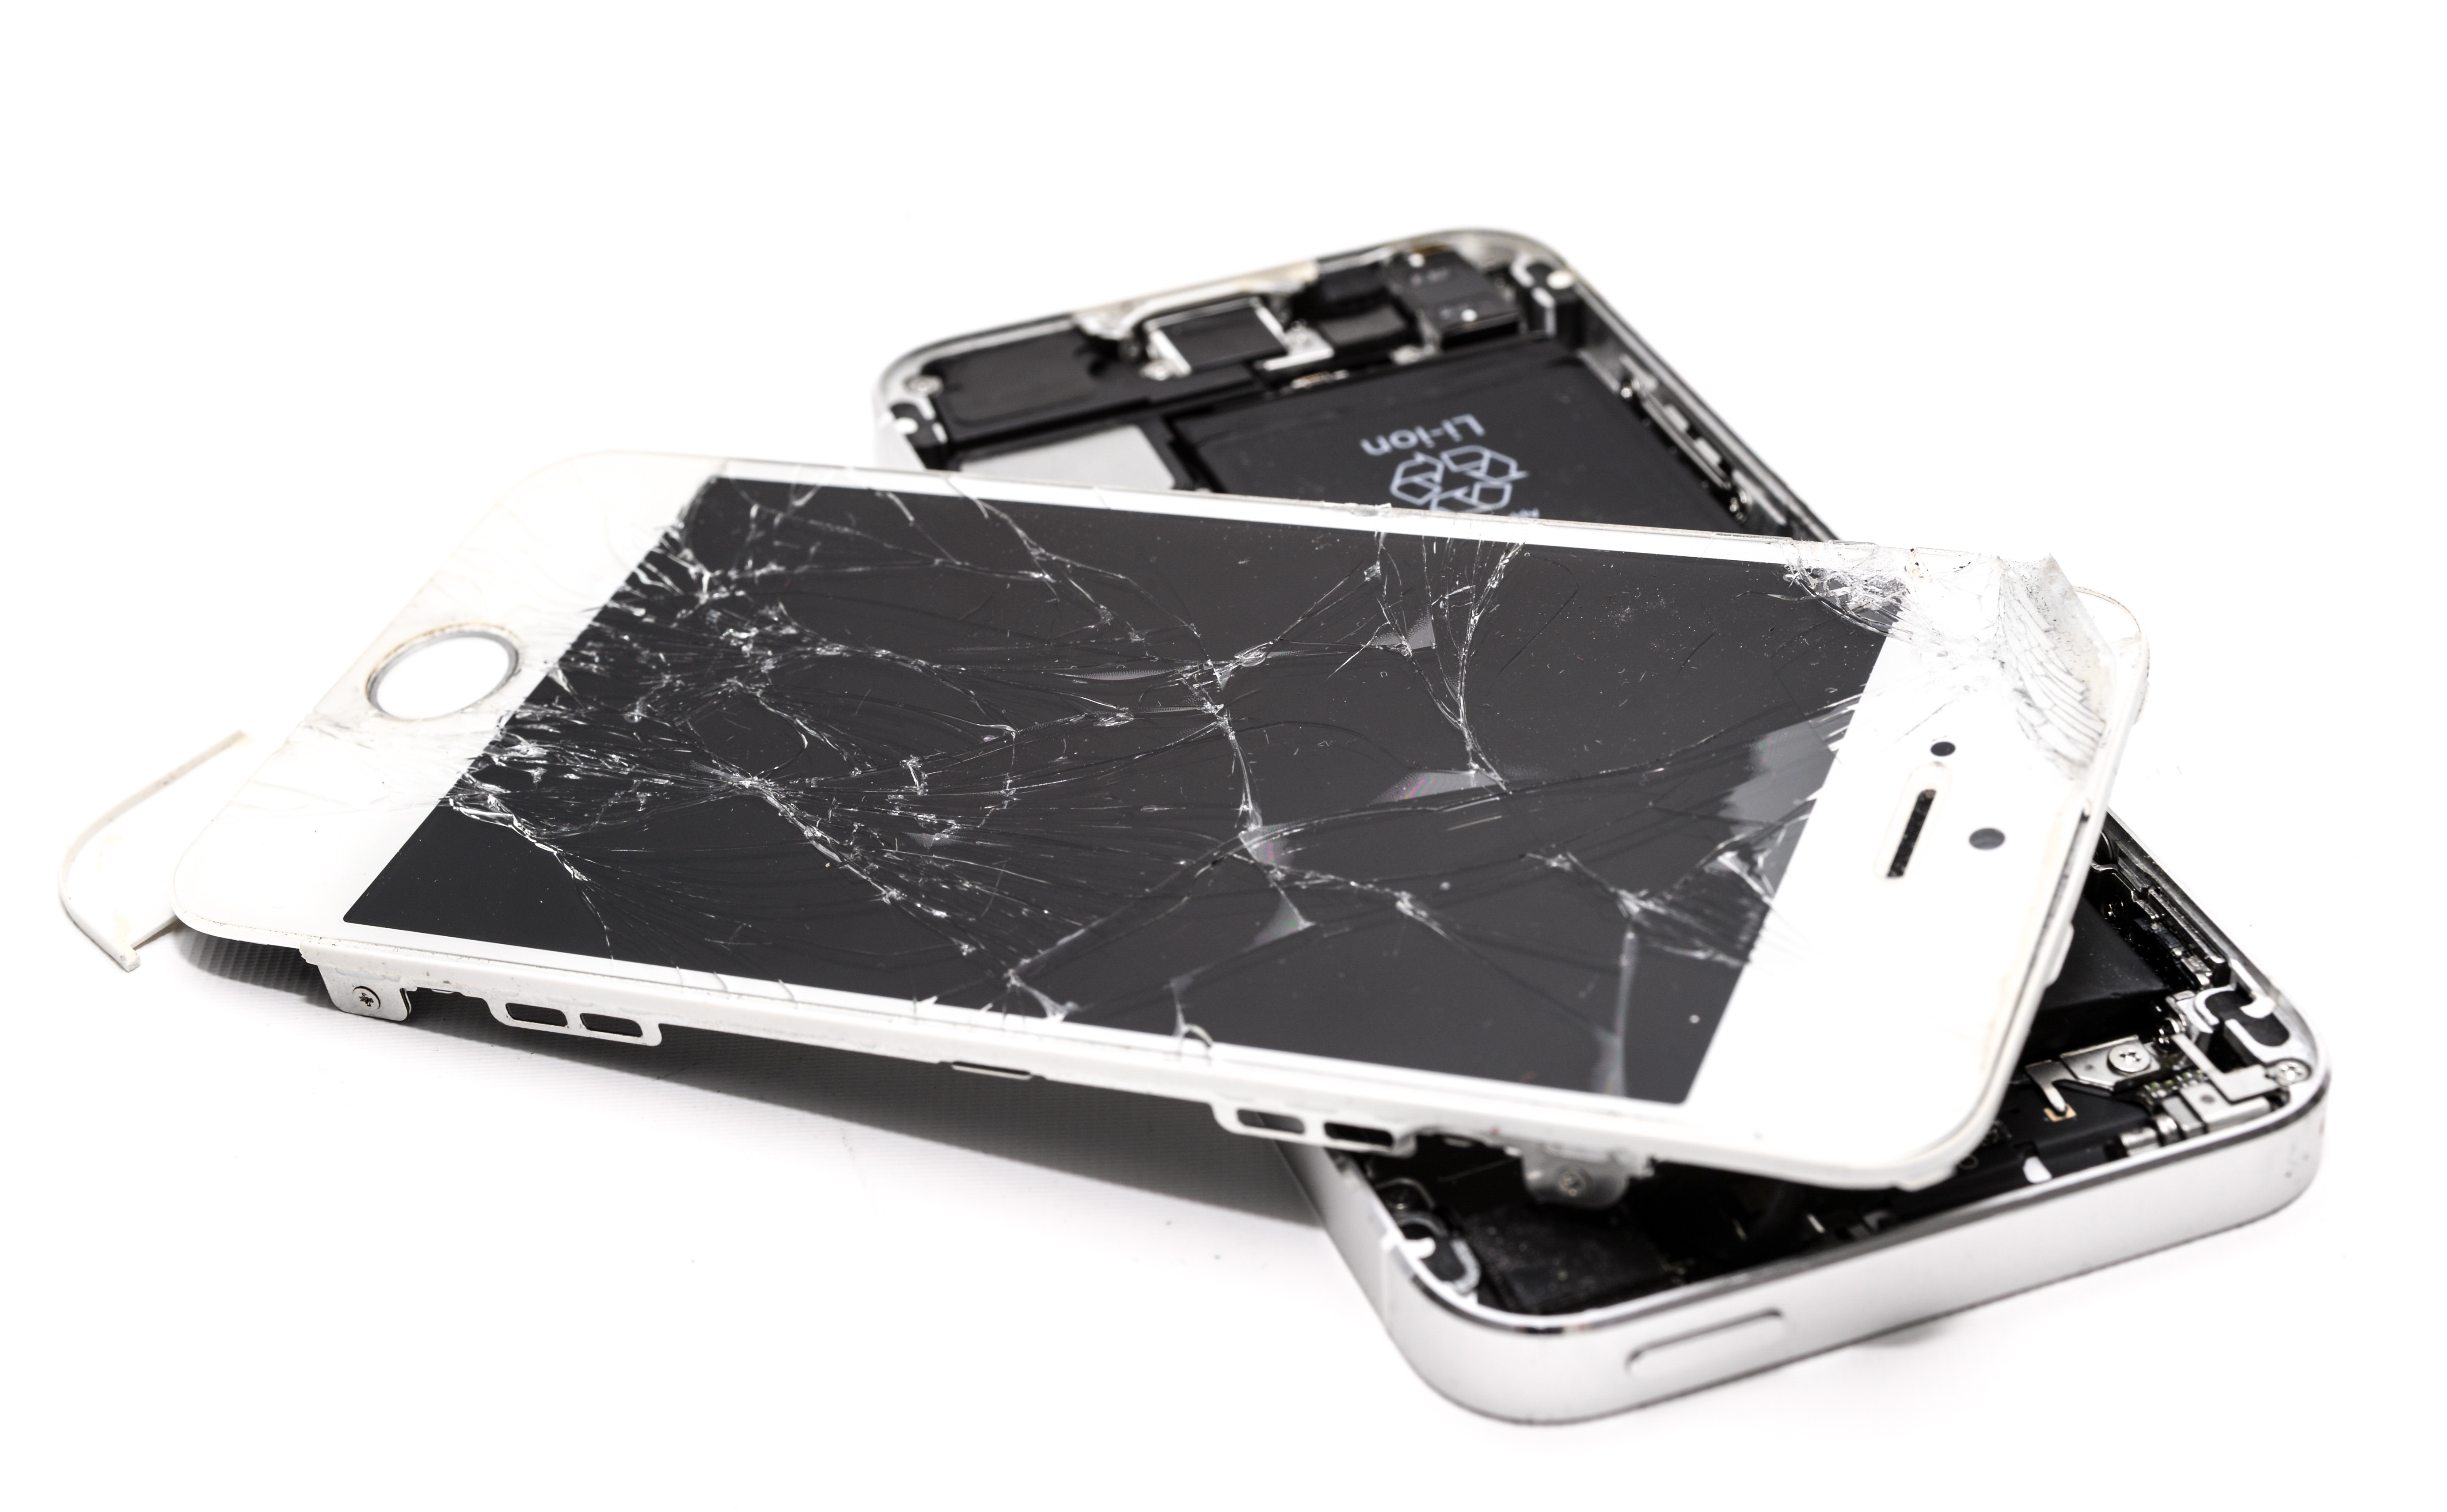 Thoroughly broken iPhone.